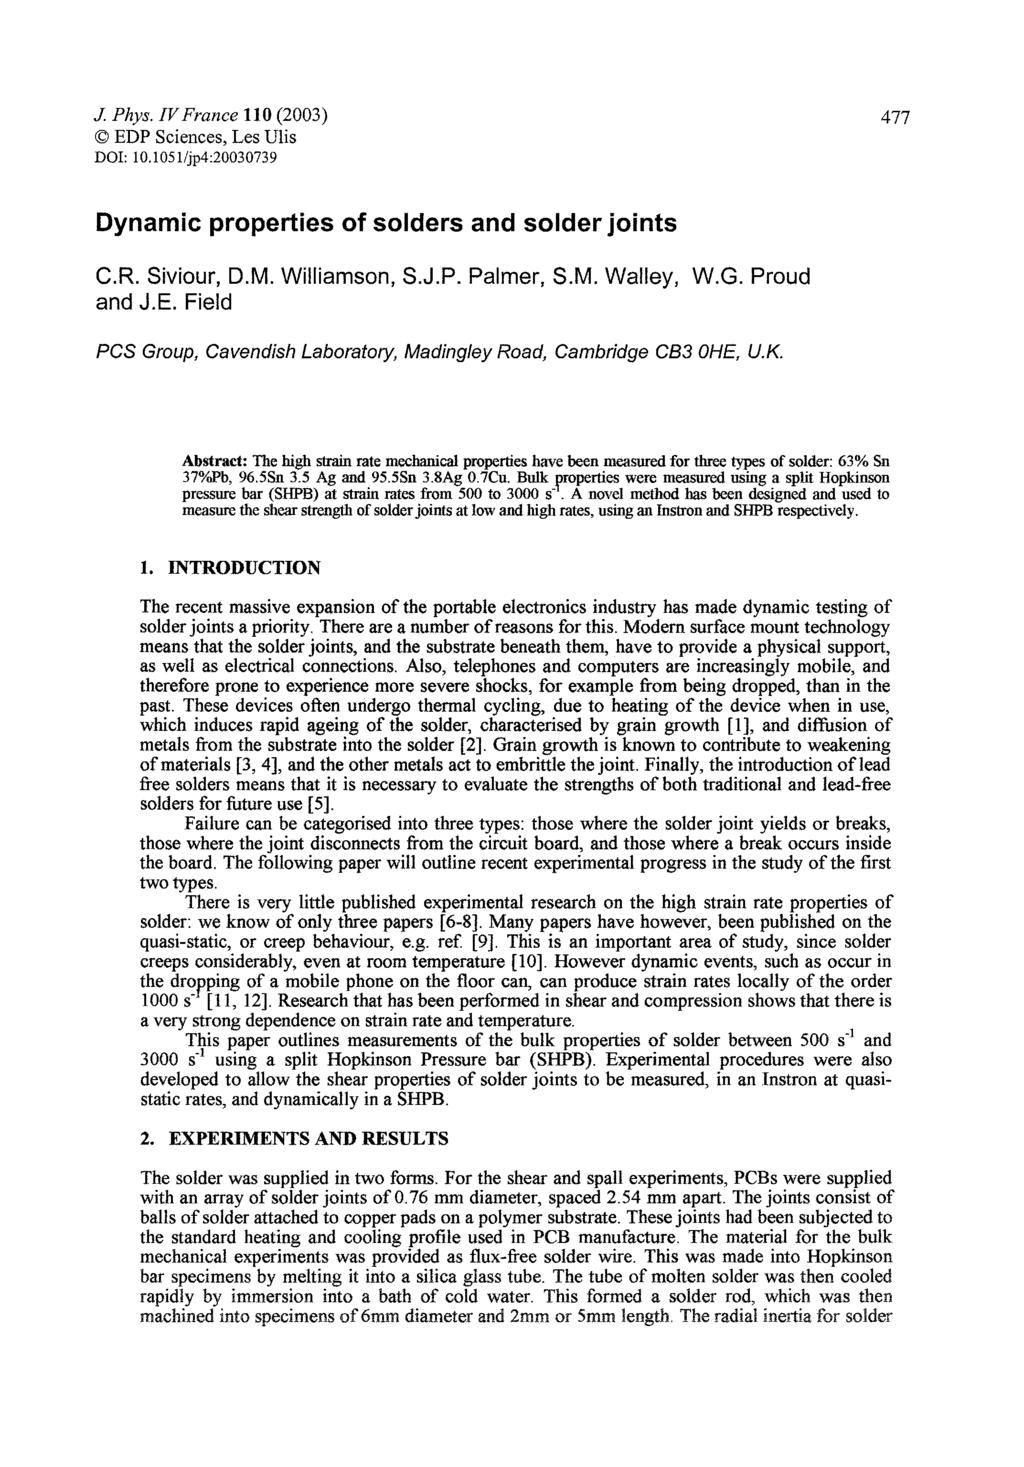 @ EDP Sciences, Les Ulis DOI: 10.1051/jp4:20030739 Dynamic properties of solders and solder joints C. R. Siviour, D. M. Williamson, S. J. P. Palmer, S. M. Walley, W. G. Proud and J. E. Field PCS Group, Cavendish Laboratory, Madingley Road, Cambridge CB3 OHE, U.